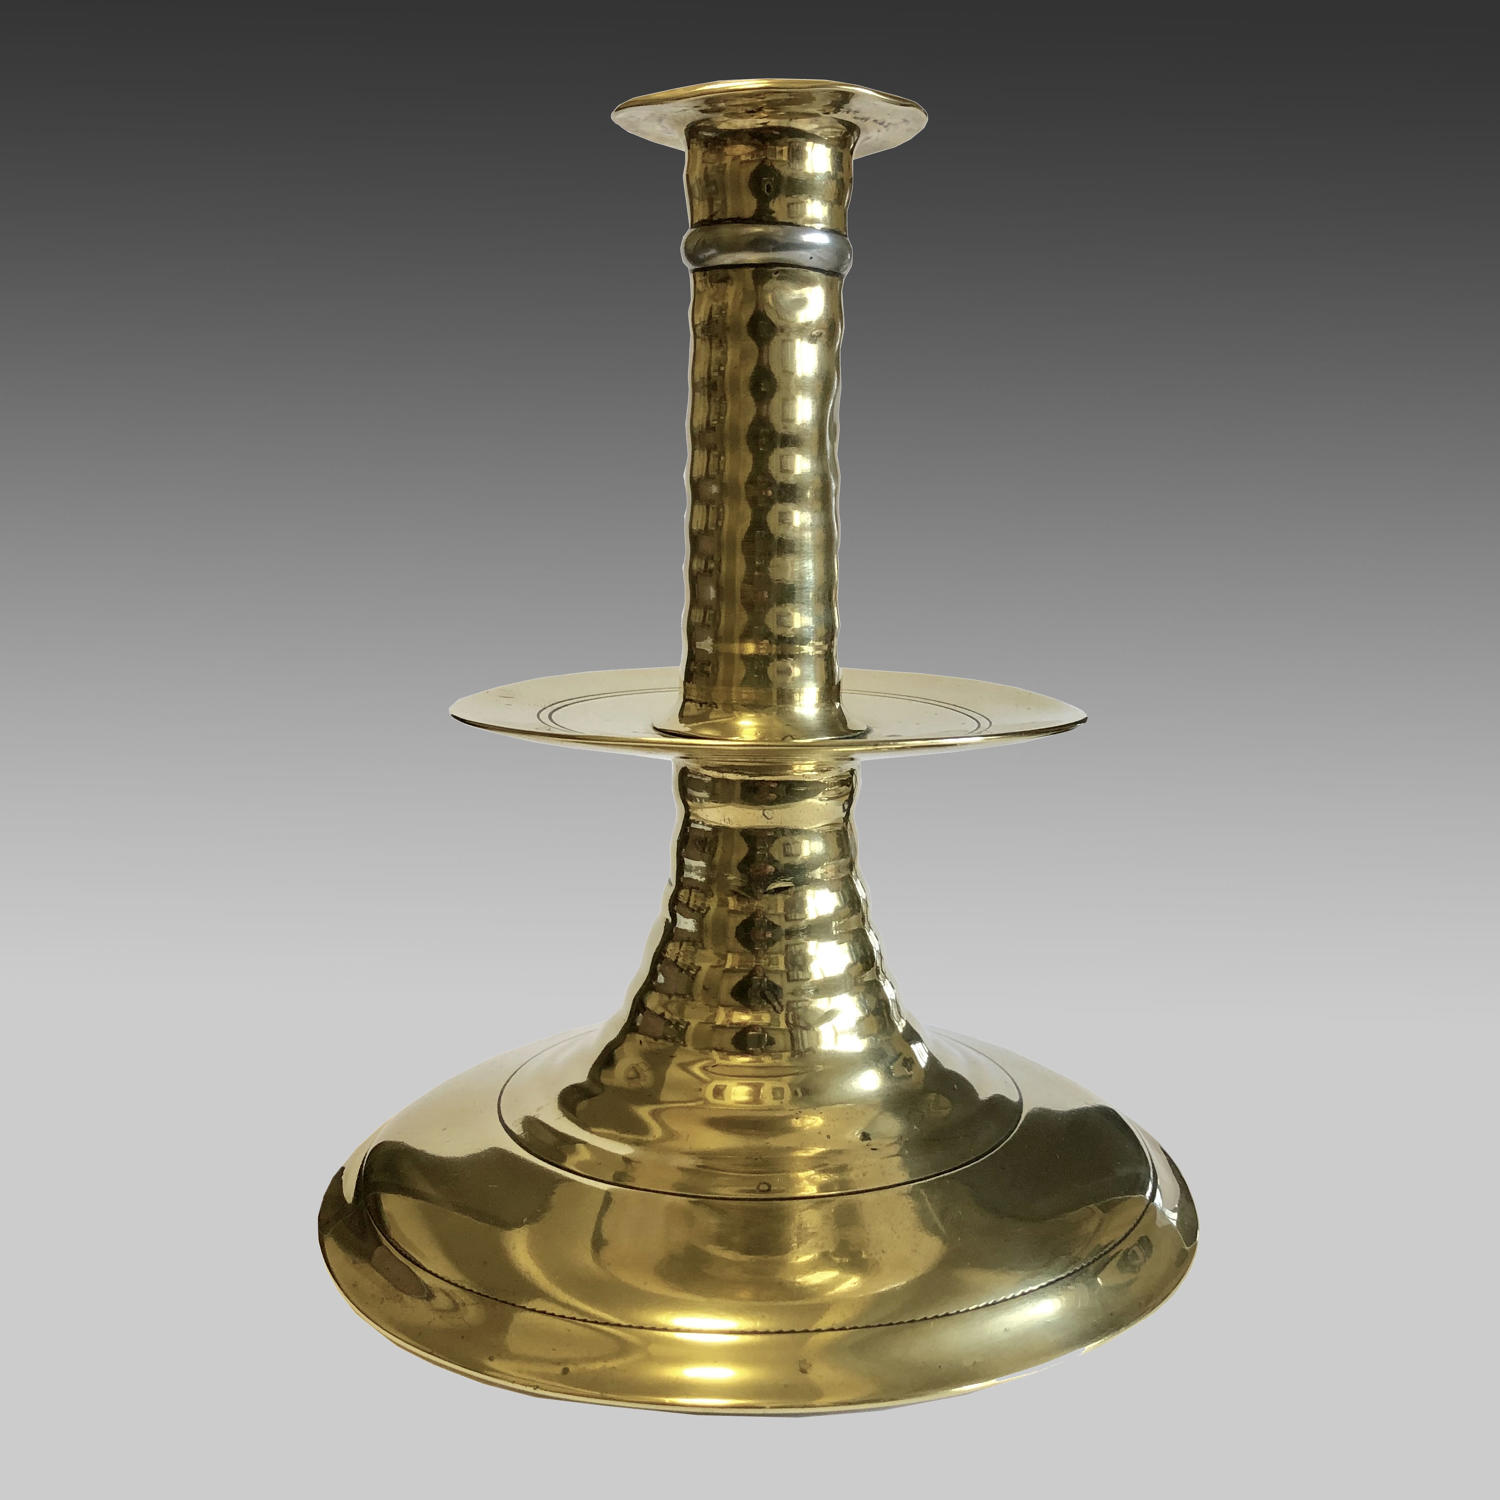 17th century brass trumpet-based candlestick